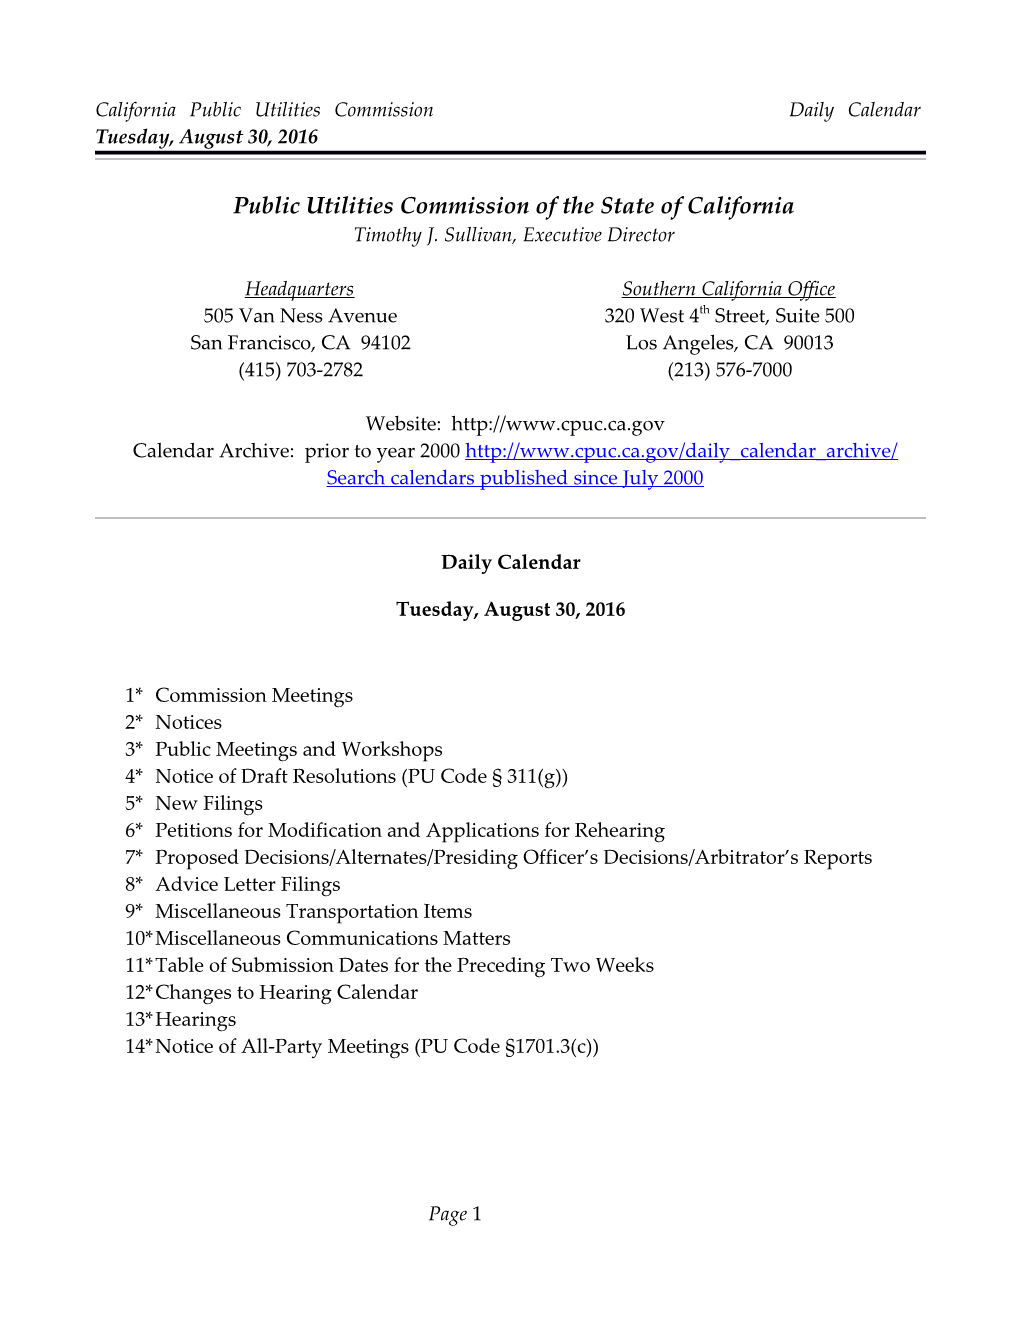 California Public Utilities Commission Daily Calendar Tuesday, August 30, 2016